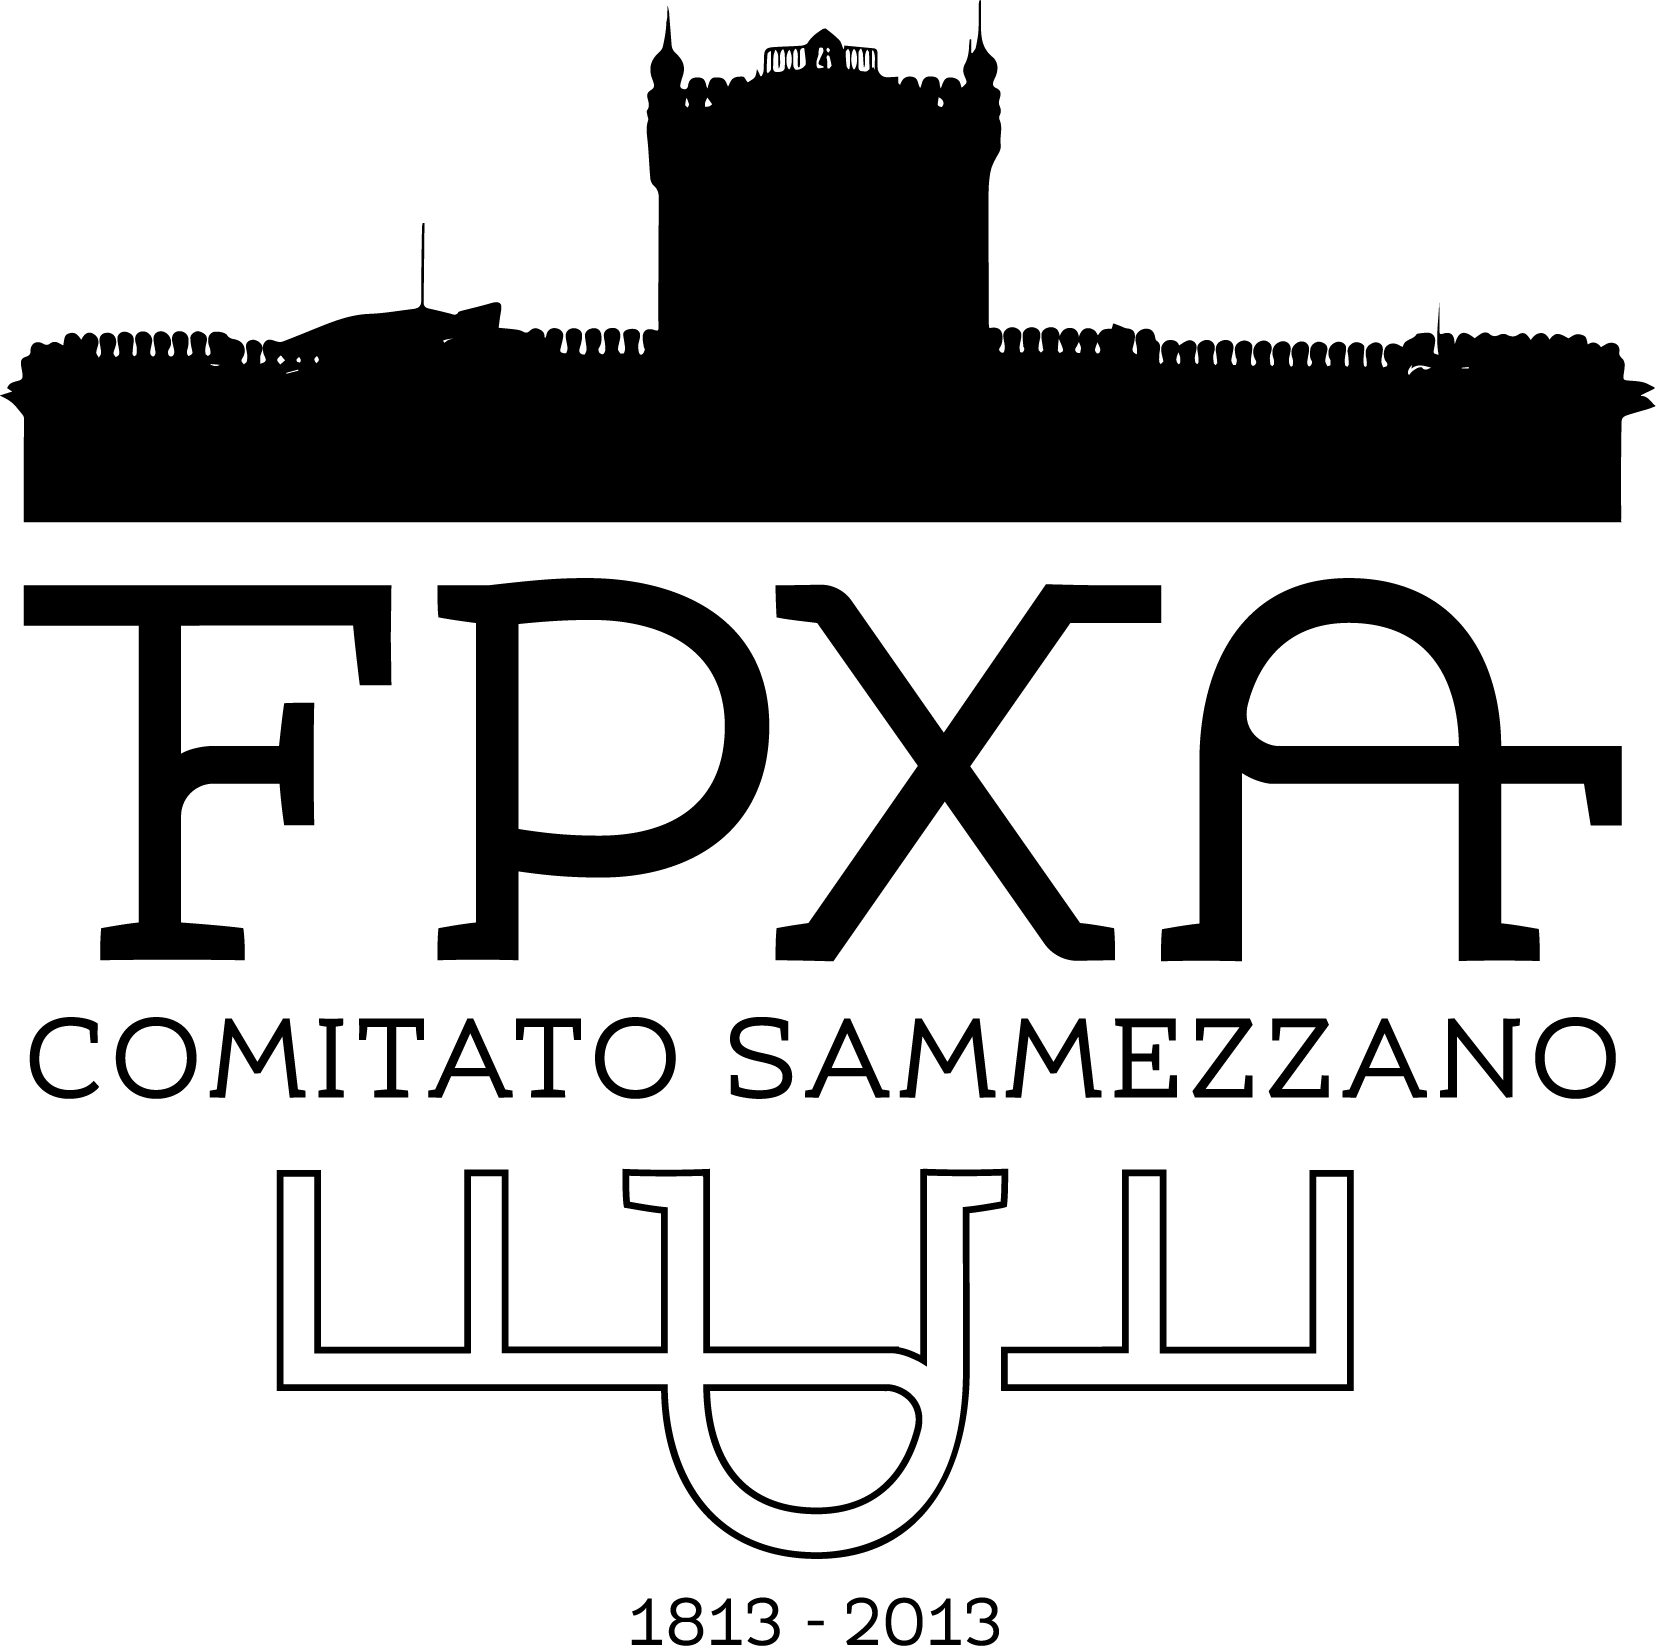 Comitato Sammezzano FPXA